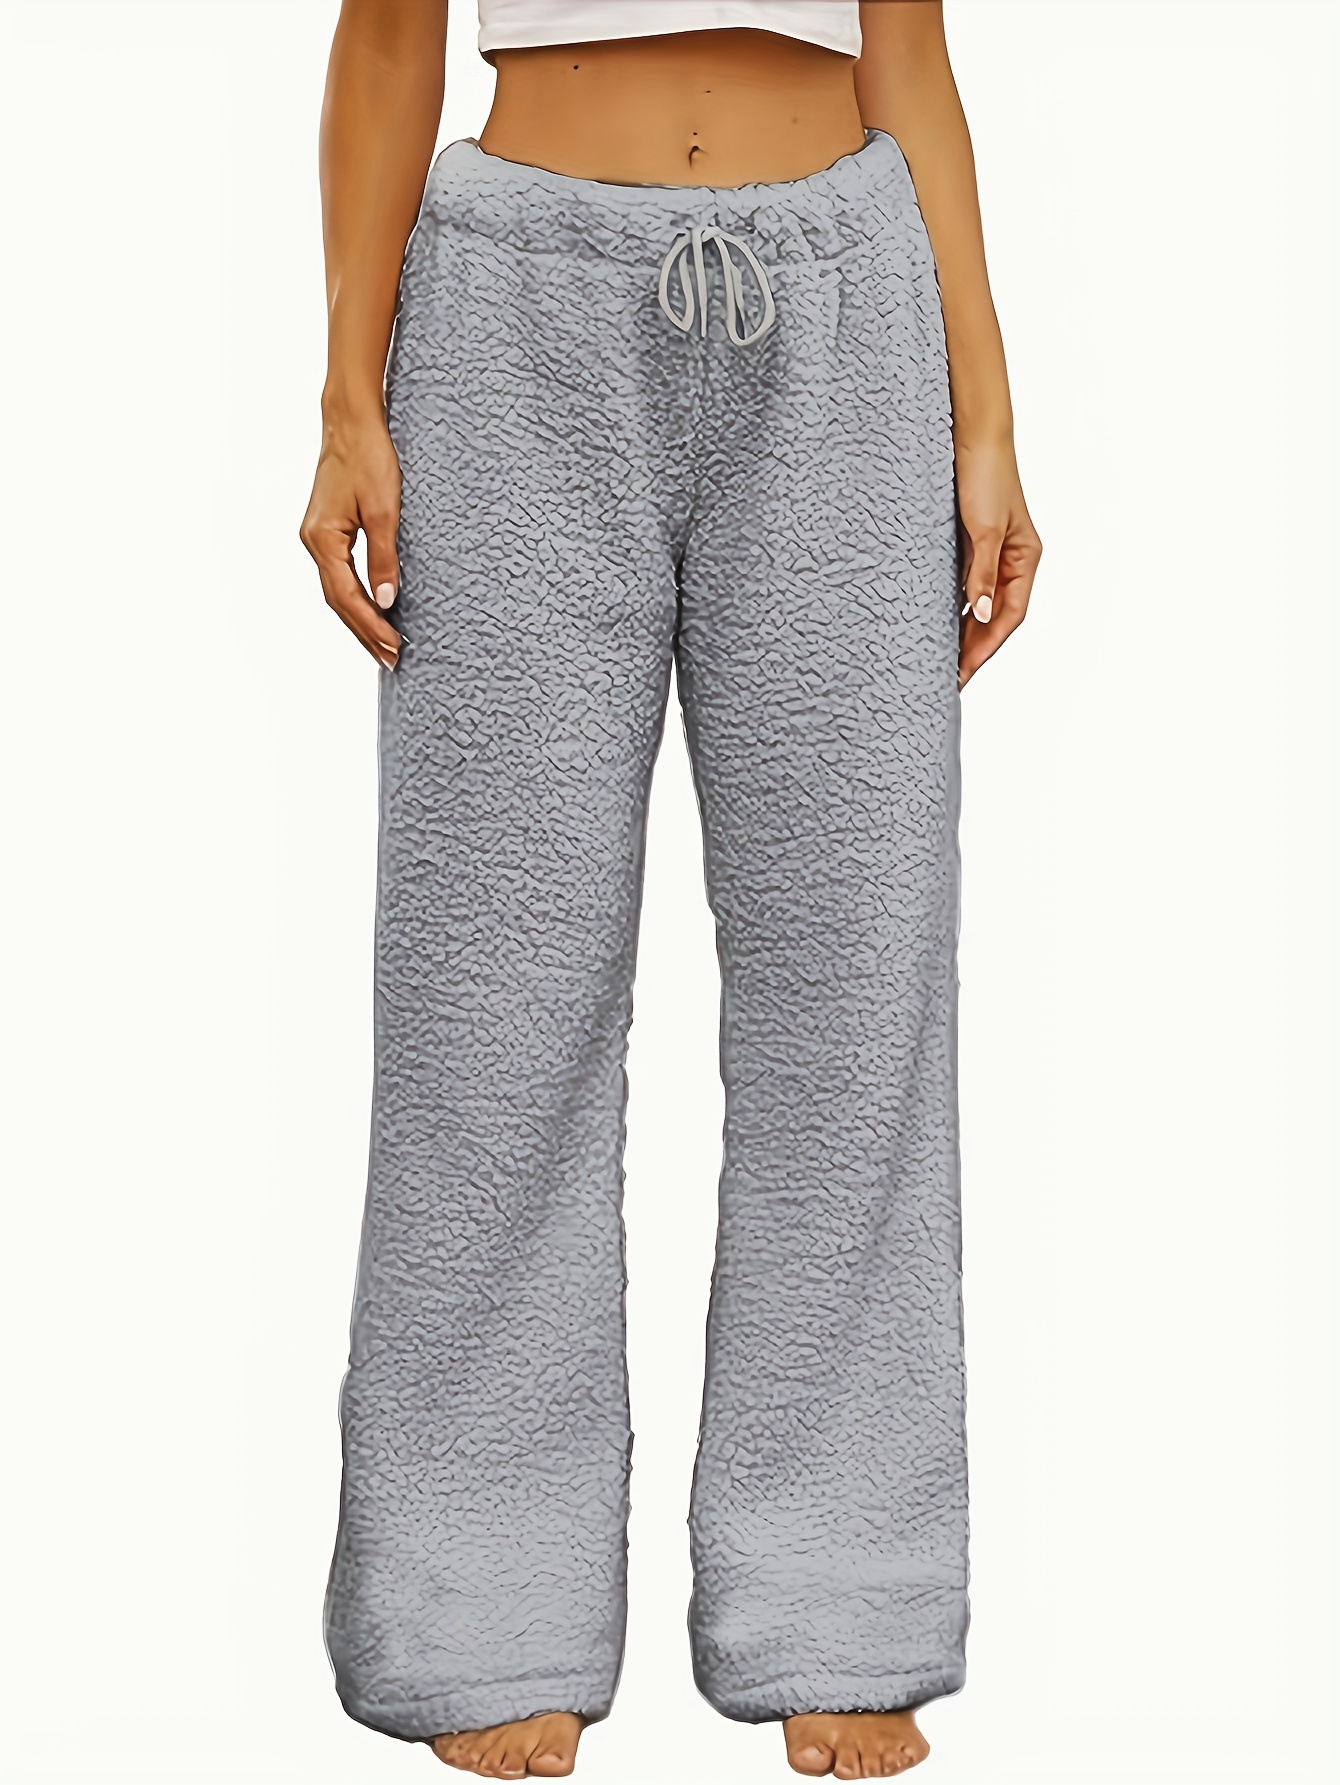 Fashion Womens Fluffy Fuzzy Pants Soft Sleep Lounge Pajama Pants Casual  Knitted Sleepwear Trousers Bottoms S-5XL 